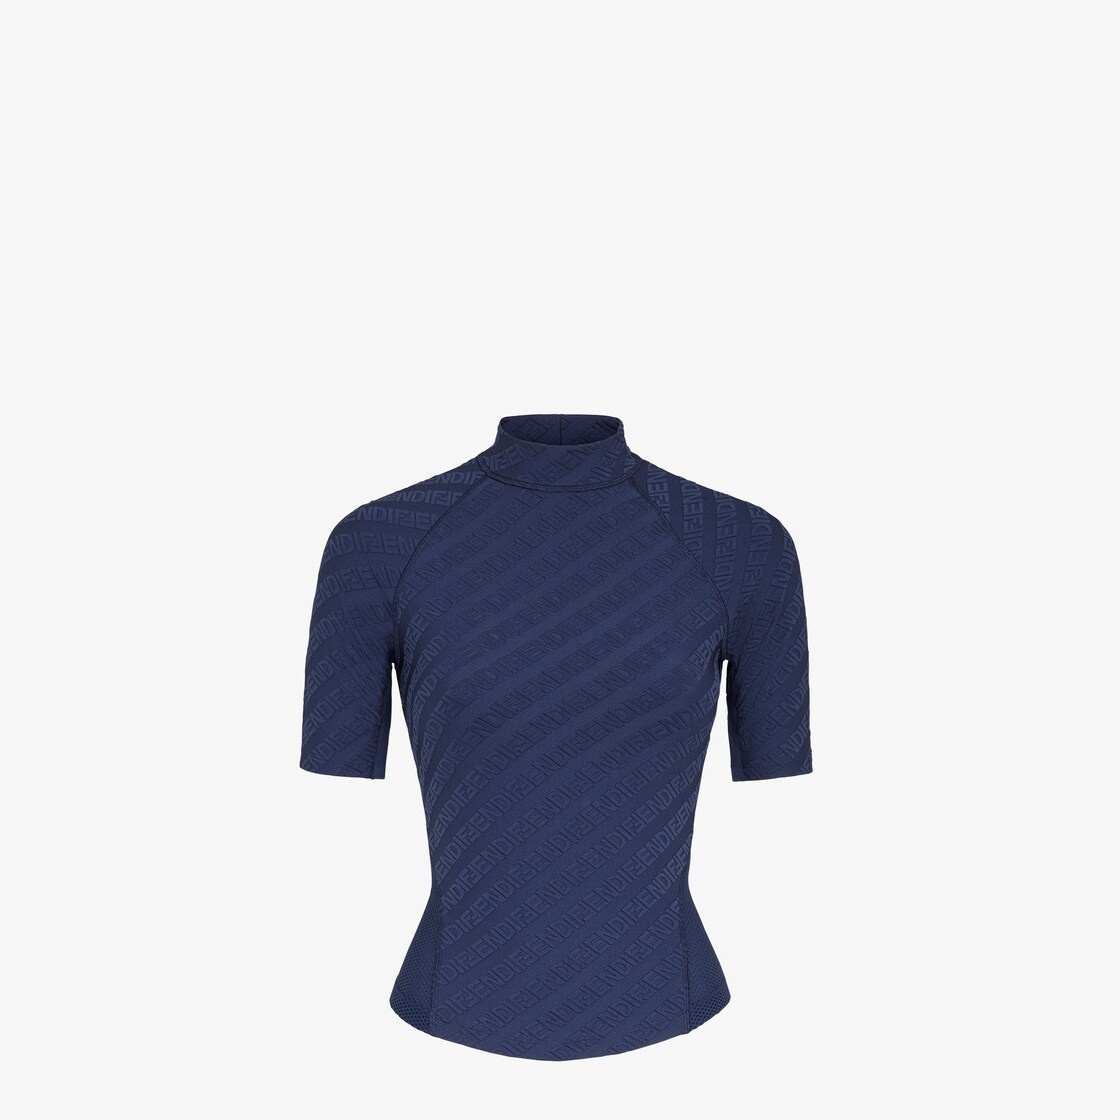 Blue FF jacquard tech knit T-shirt - 1